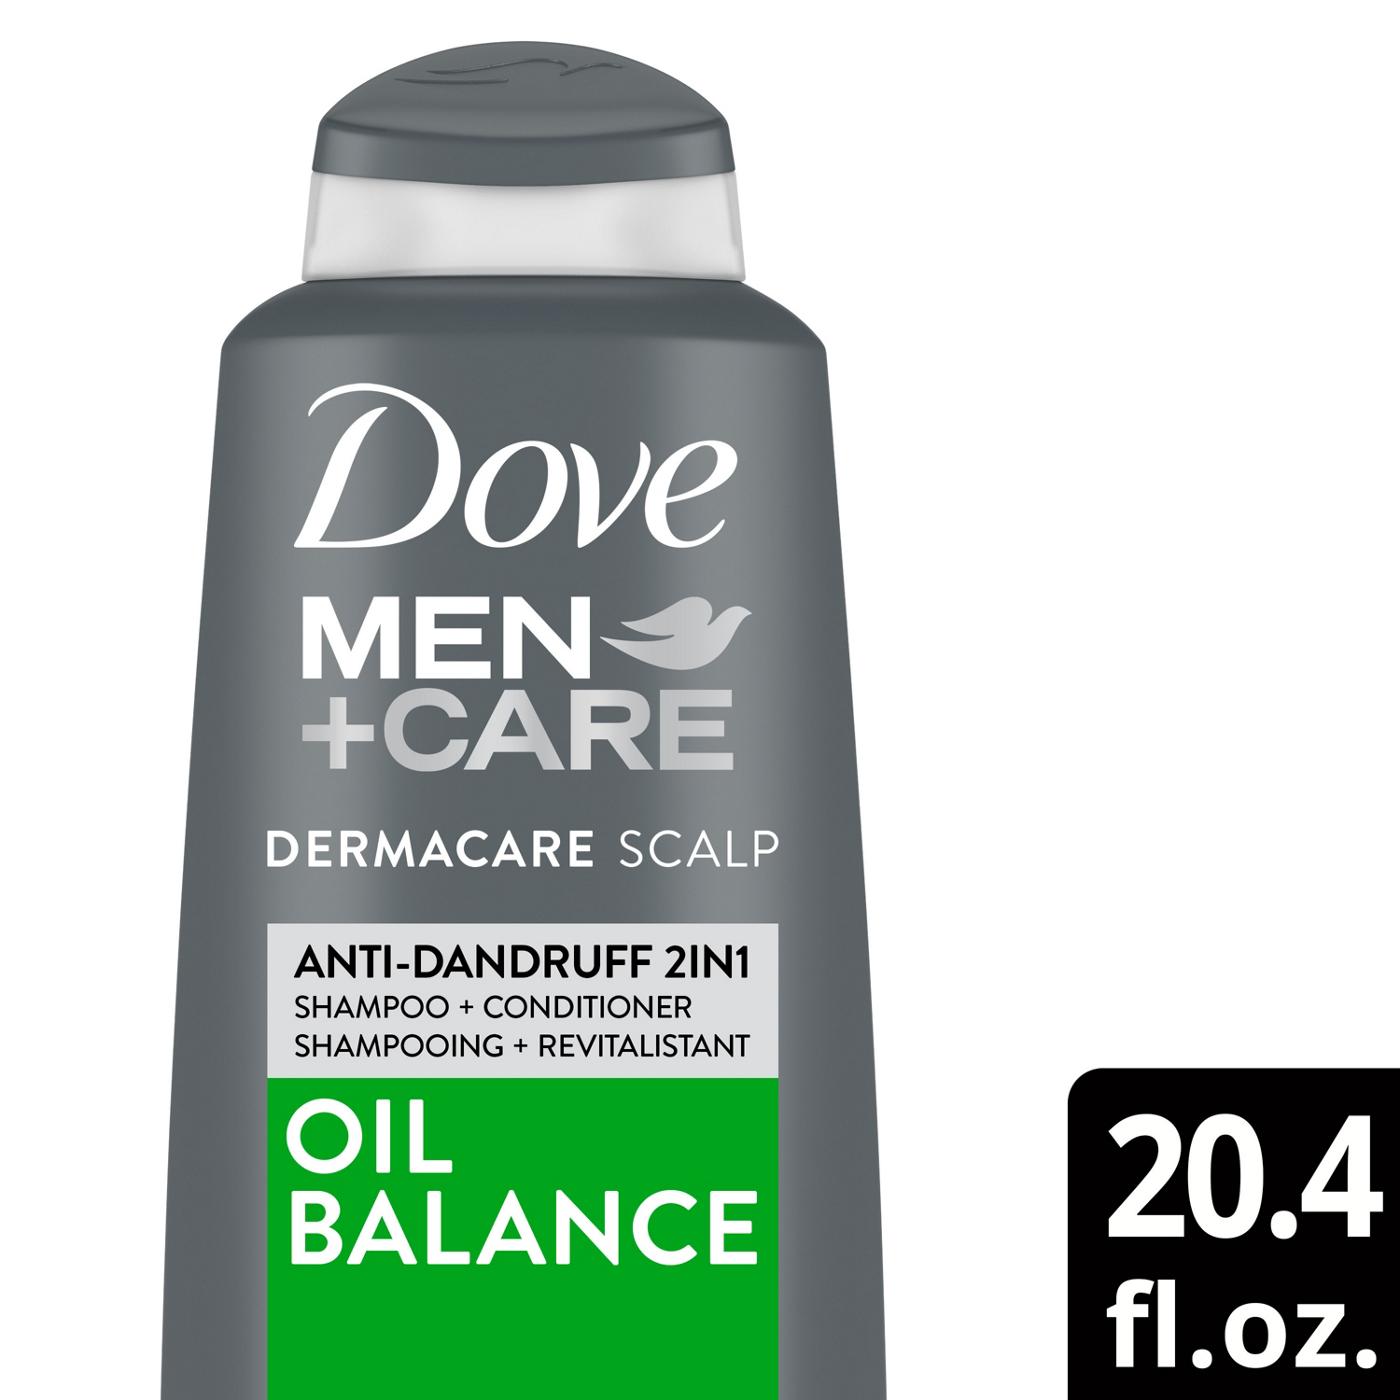 Dove Men+Care DermaCare Scalp 2-in-1 Shampoo + Conditioner - Oil Balance; image 5 of 5